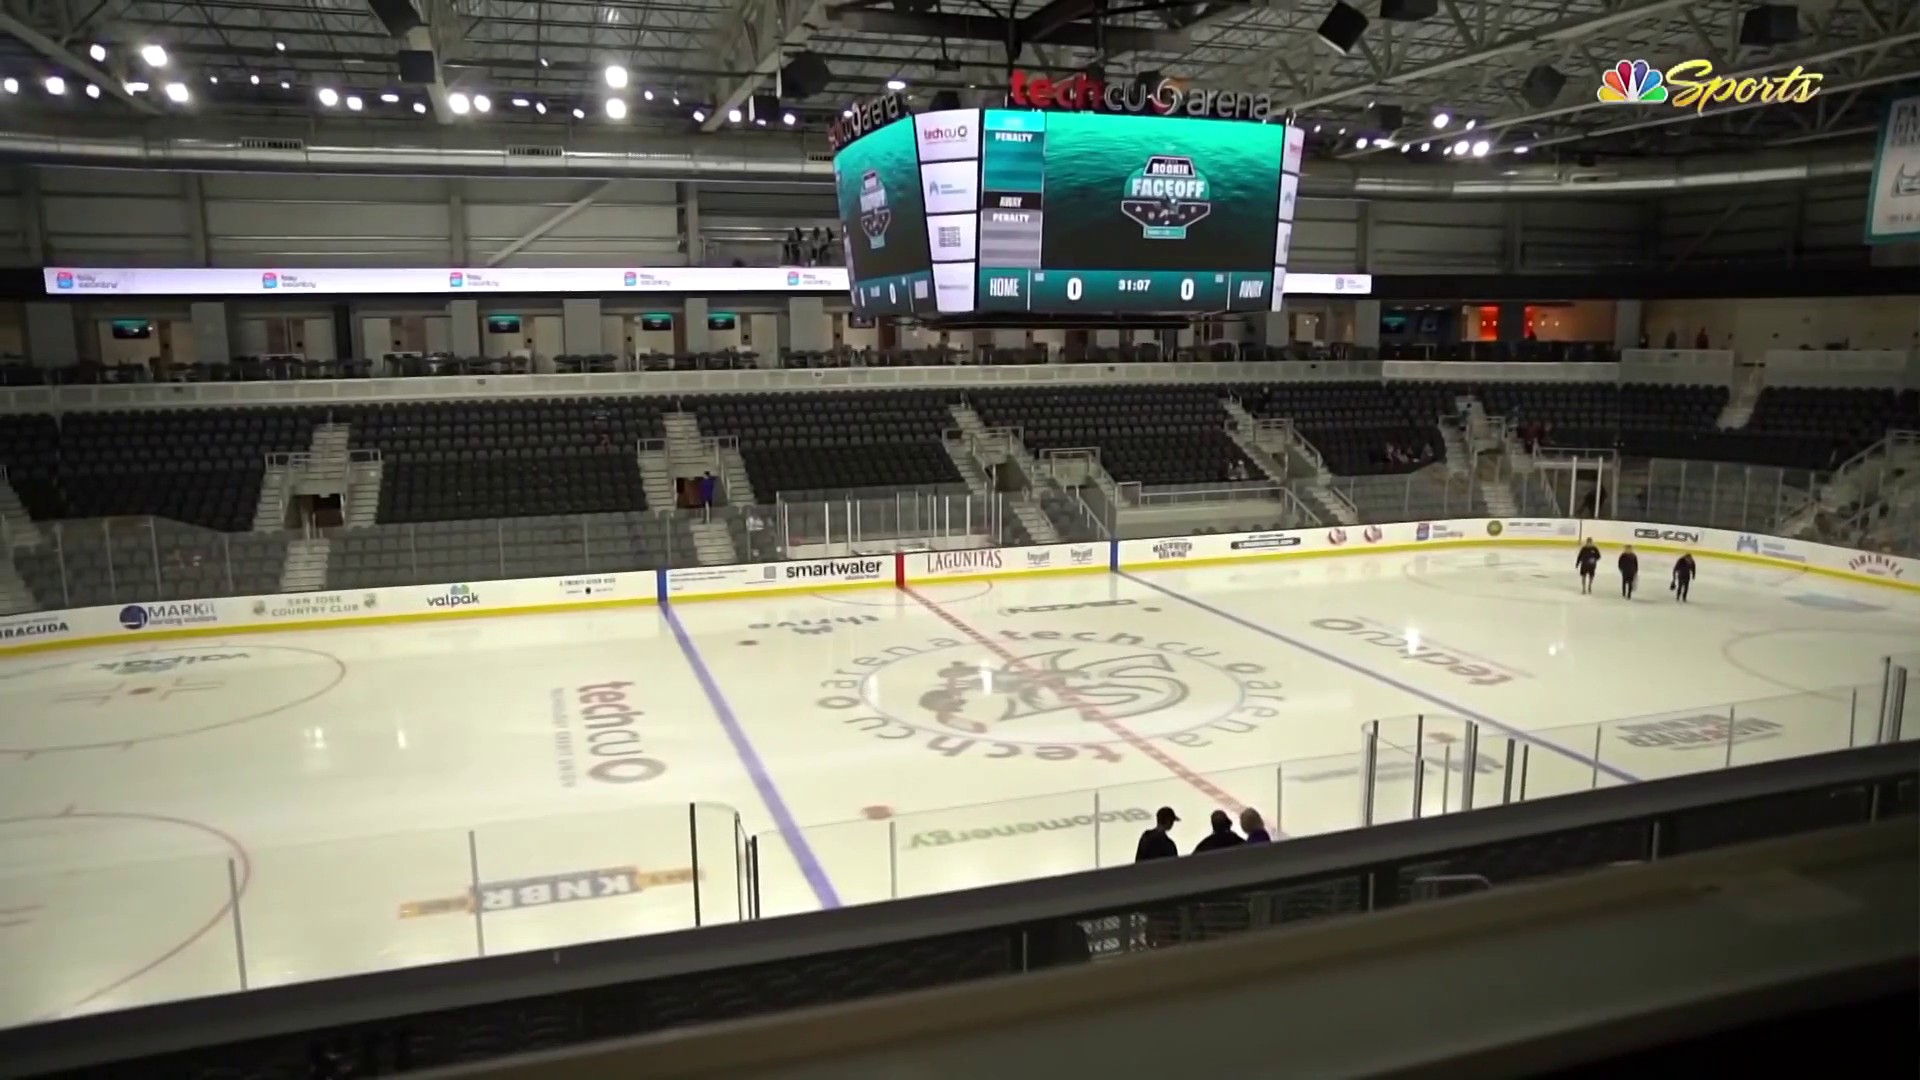 San Jose Barracuda ice hockey arena prepares to heat up downtown